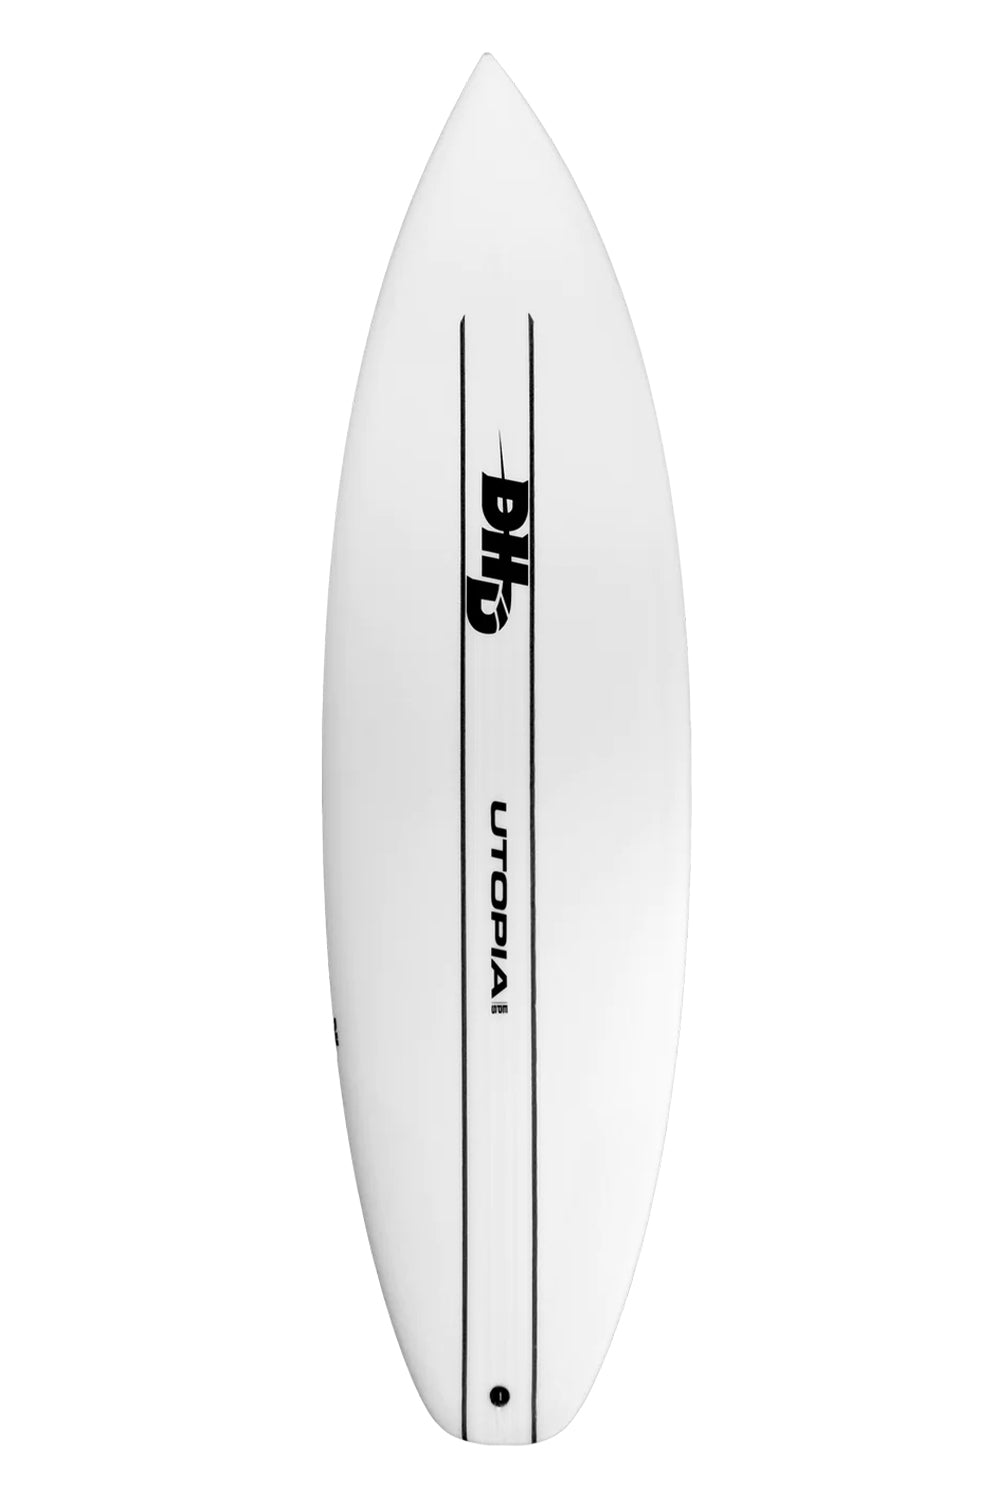 DHD Utopia EPS Surfboard